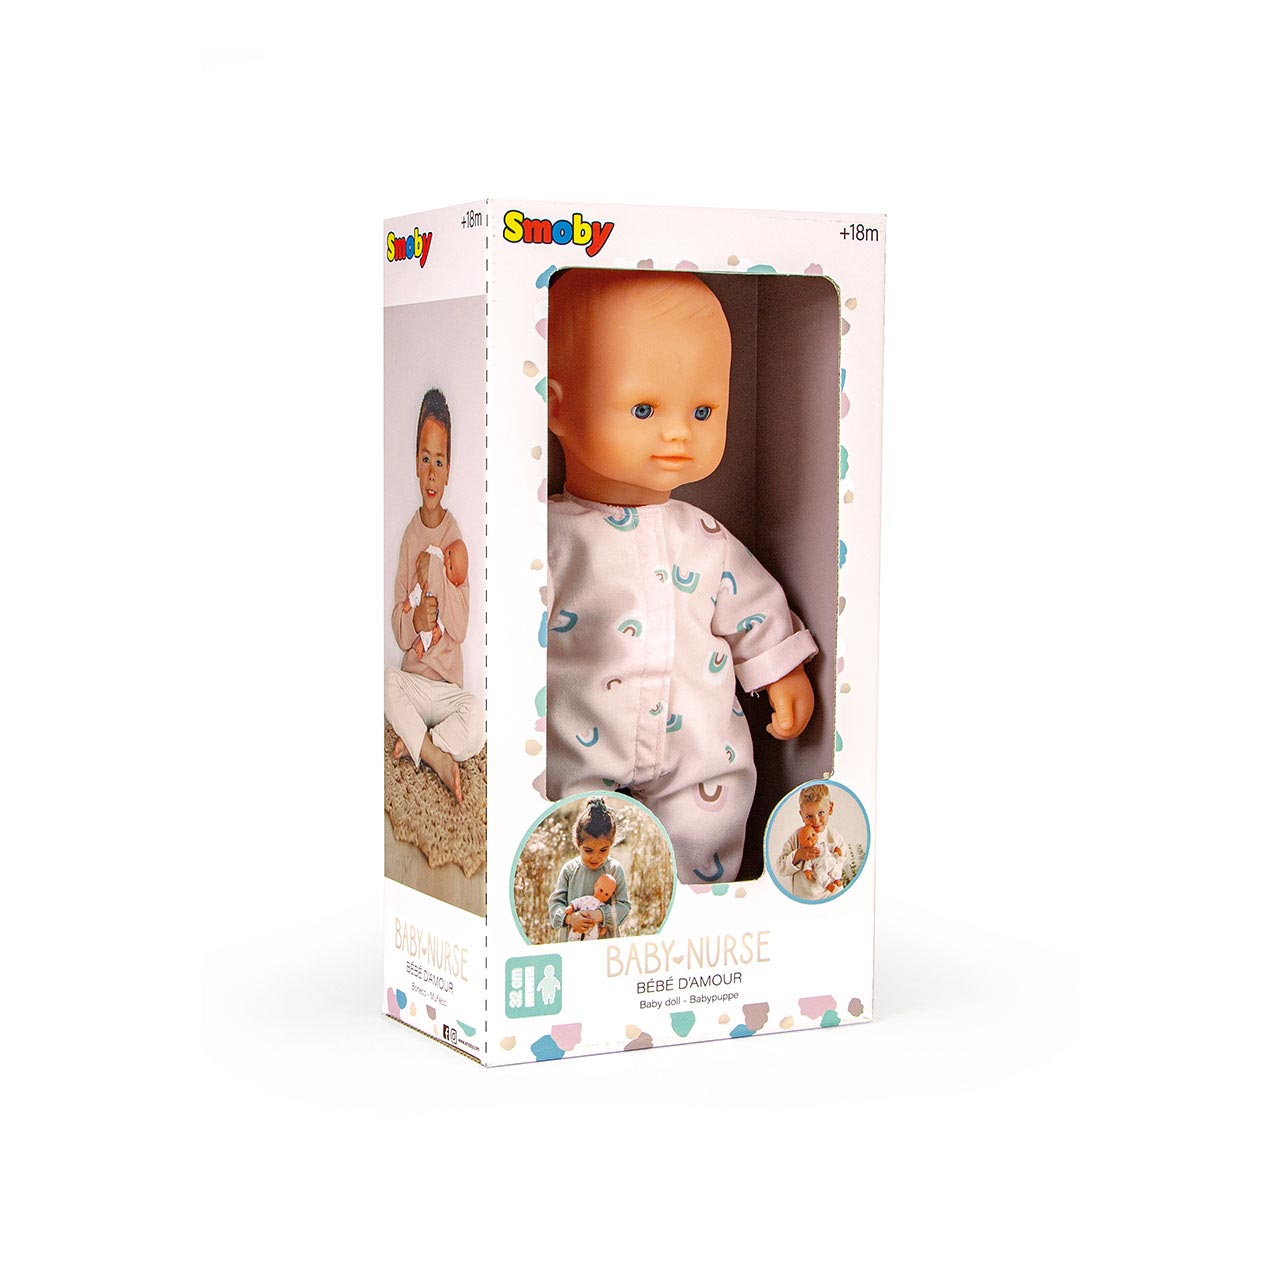 Smoby Baby-Krankenschwester-Puppe, 32 cm